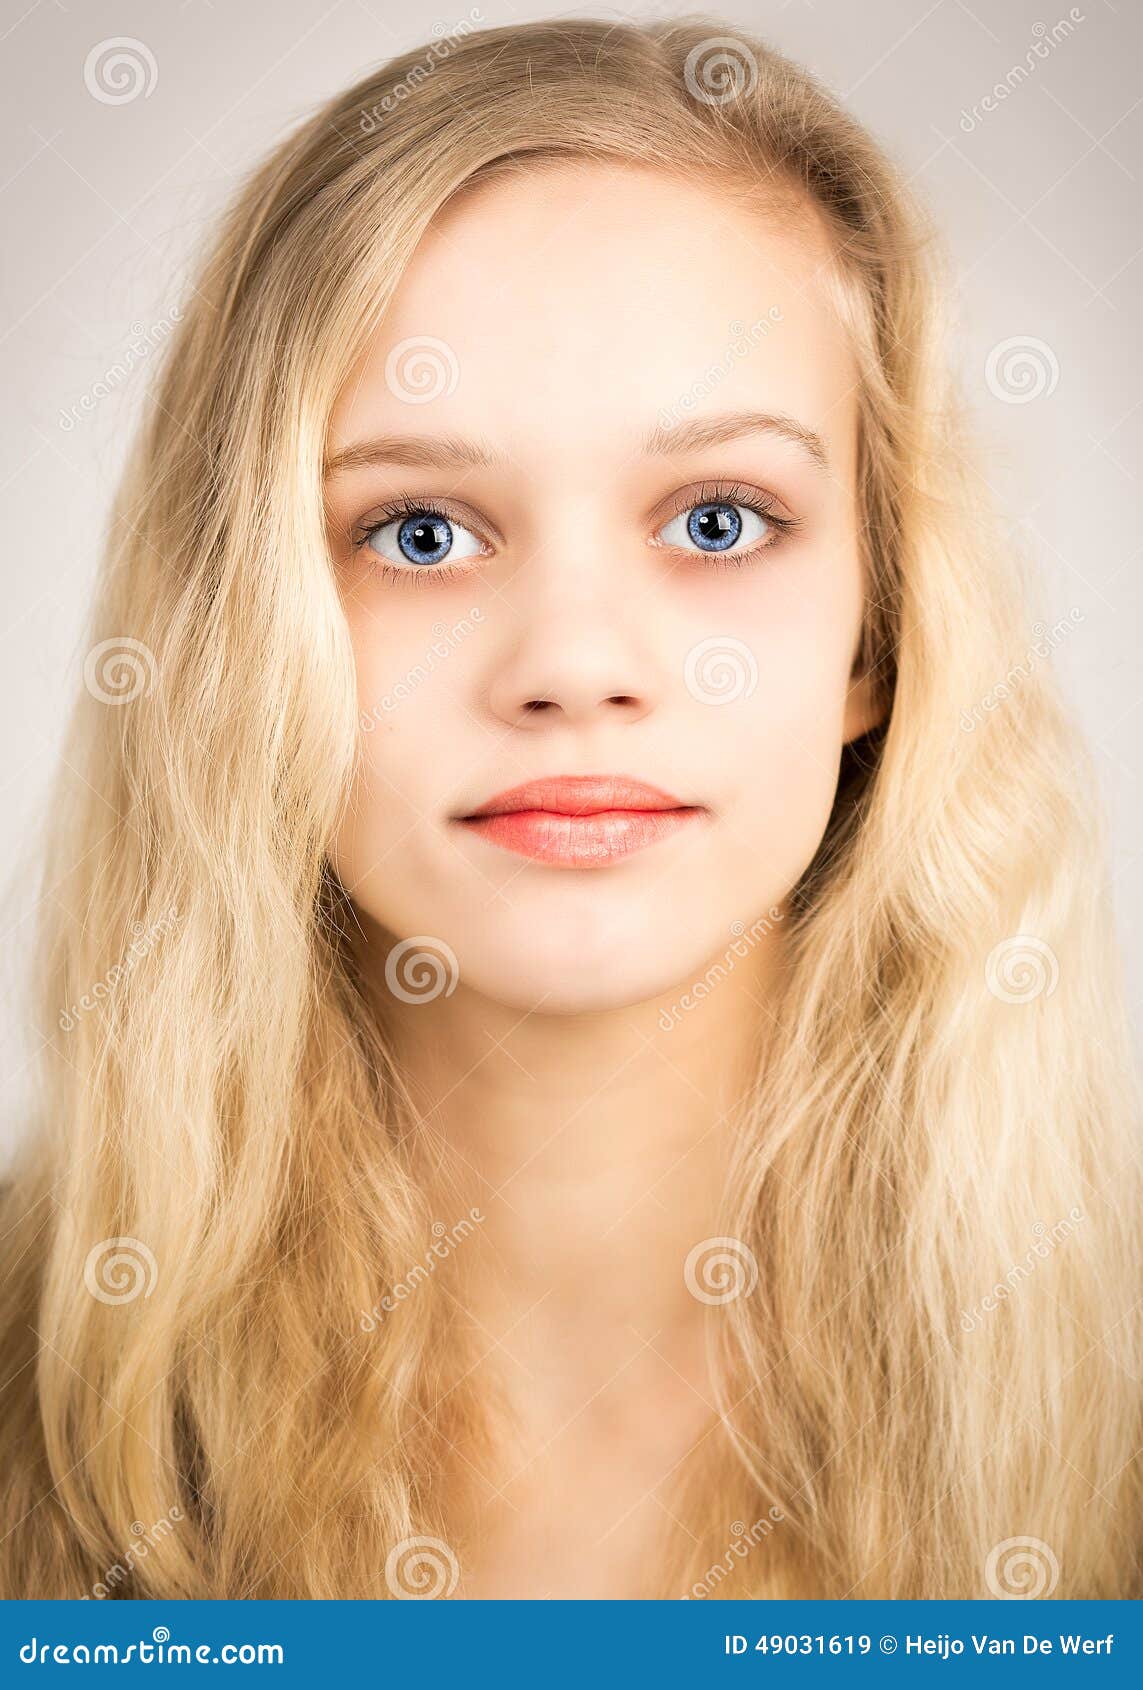 Beautiful Blond Teenage Girl Looking In The Camera Stock